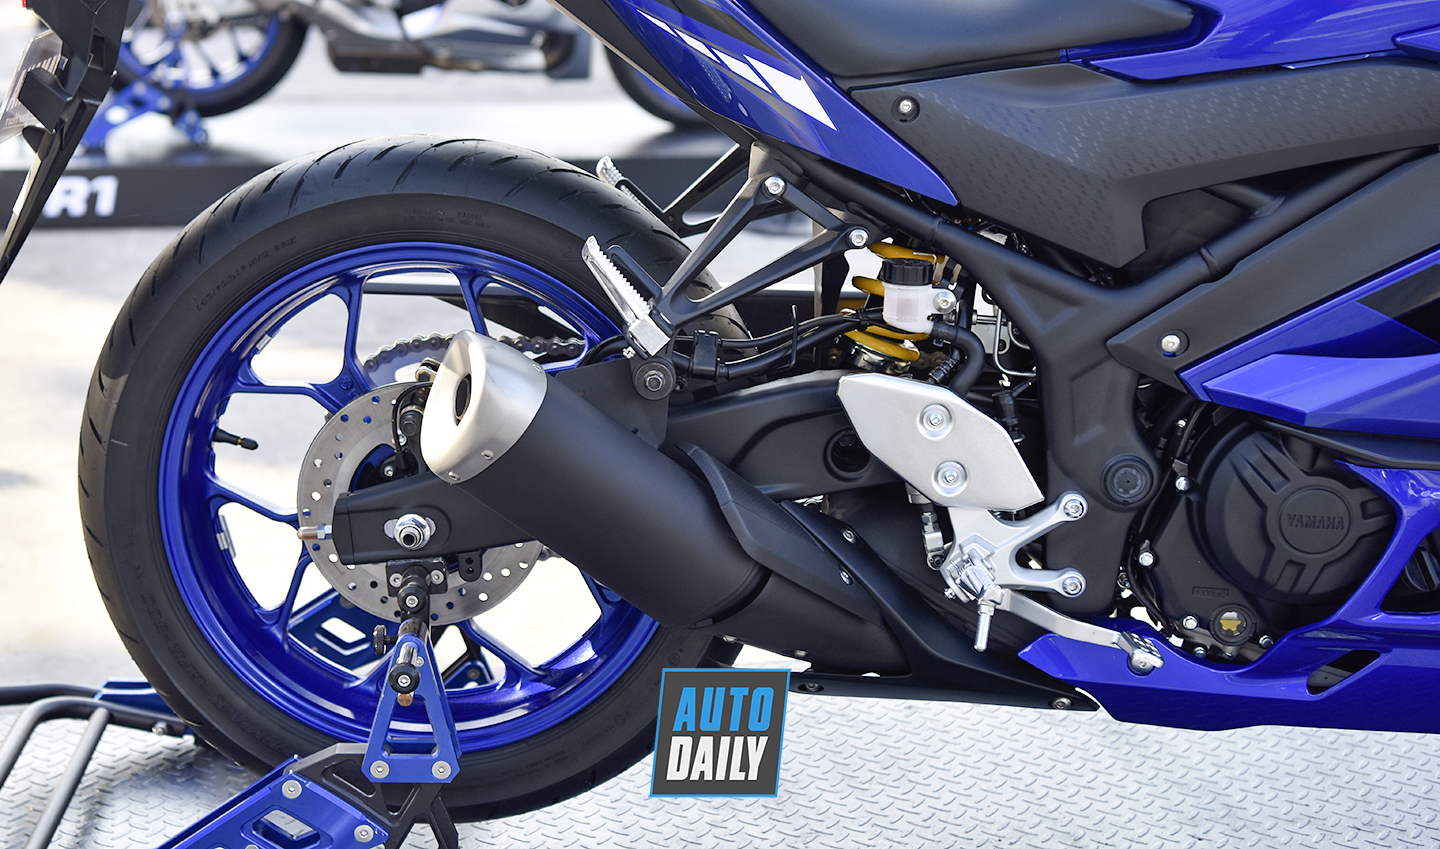 For Yamaha YZF R3 R3 2019 2020 2021 2022 Motorcycle Fairing Parts  Aerodynamic Wing Kit Fixed Winglet Fairing WingKhuôn Đúc Phủ  Trang Trí   AliExpress